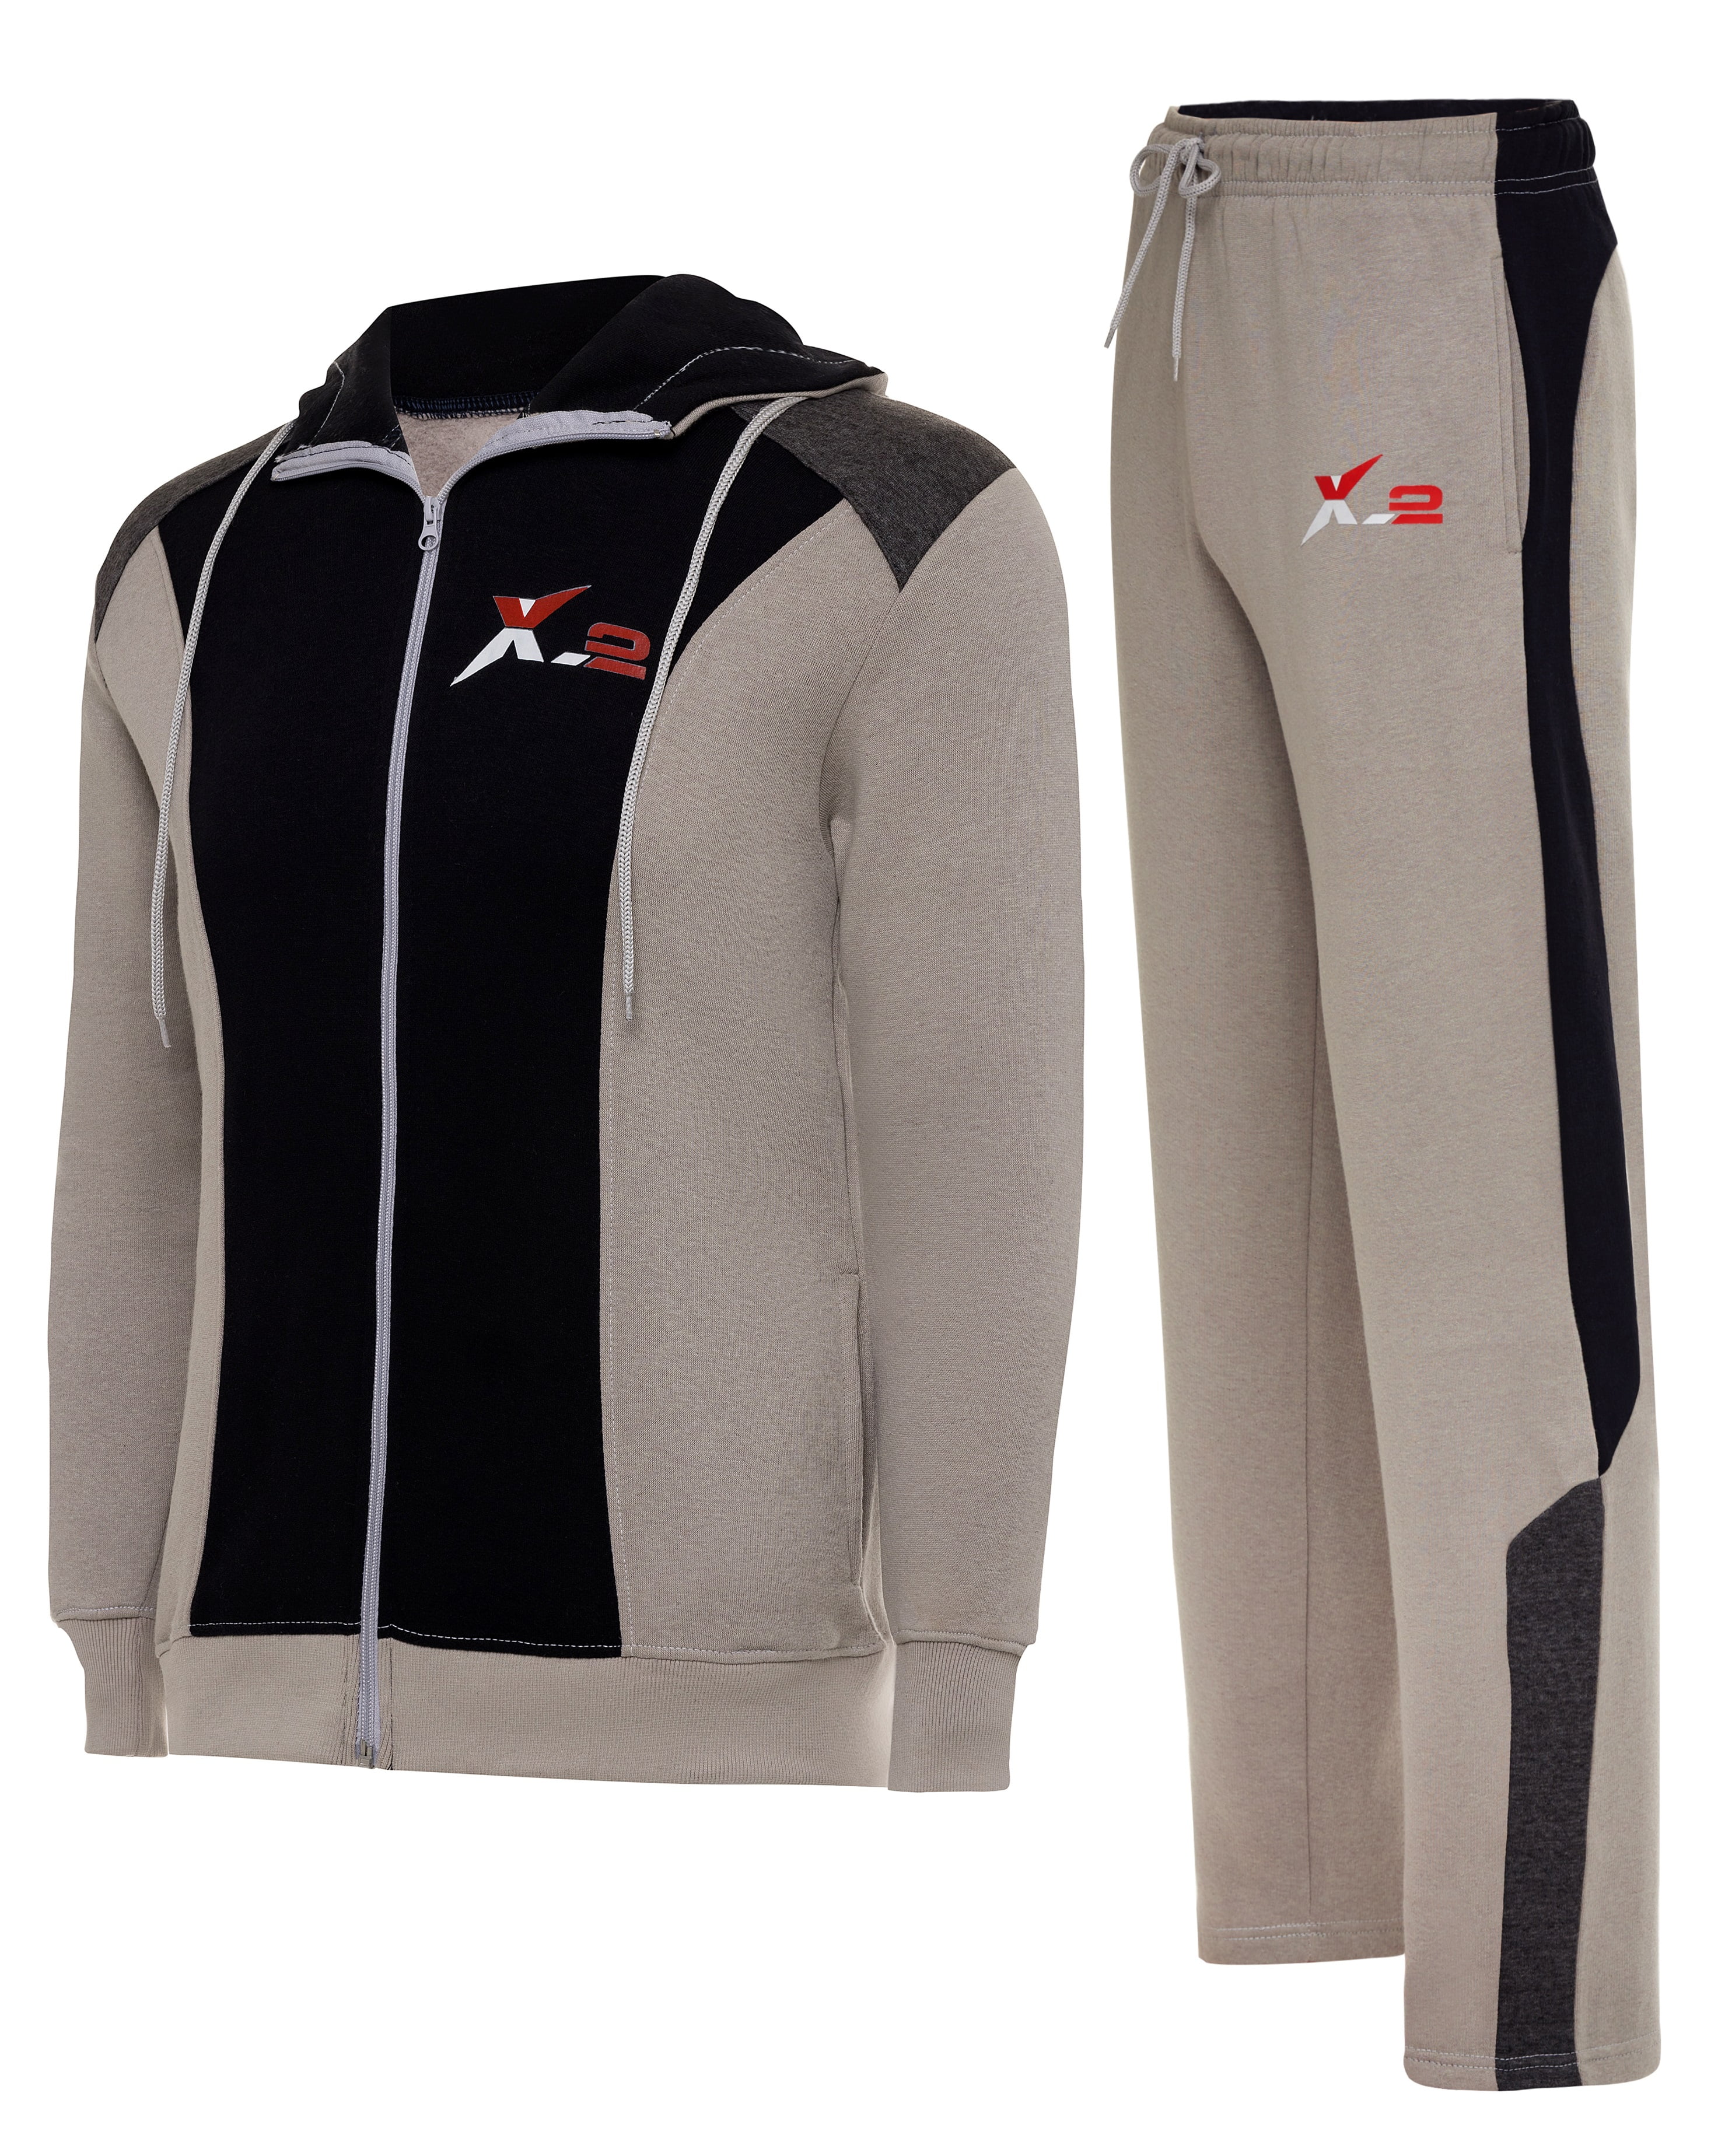 X-2 Men Track Suits 2 Pieces Set Full Zip Sweatsuit Men Hooded Tracksuit  Athletic Sports Set Gray-Maroon XXXL